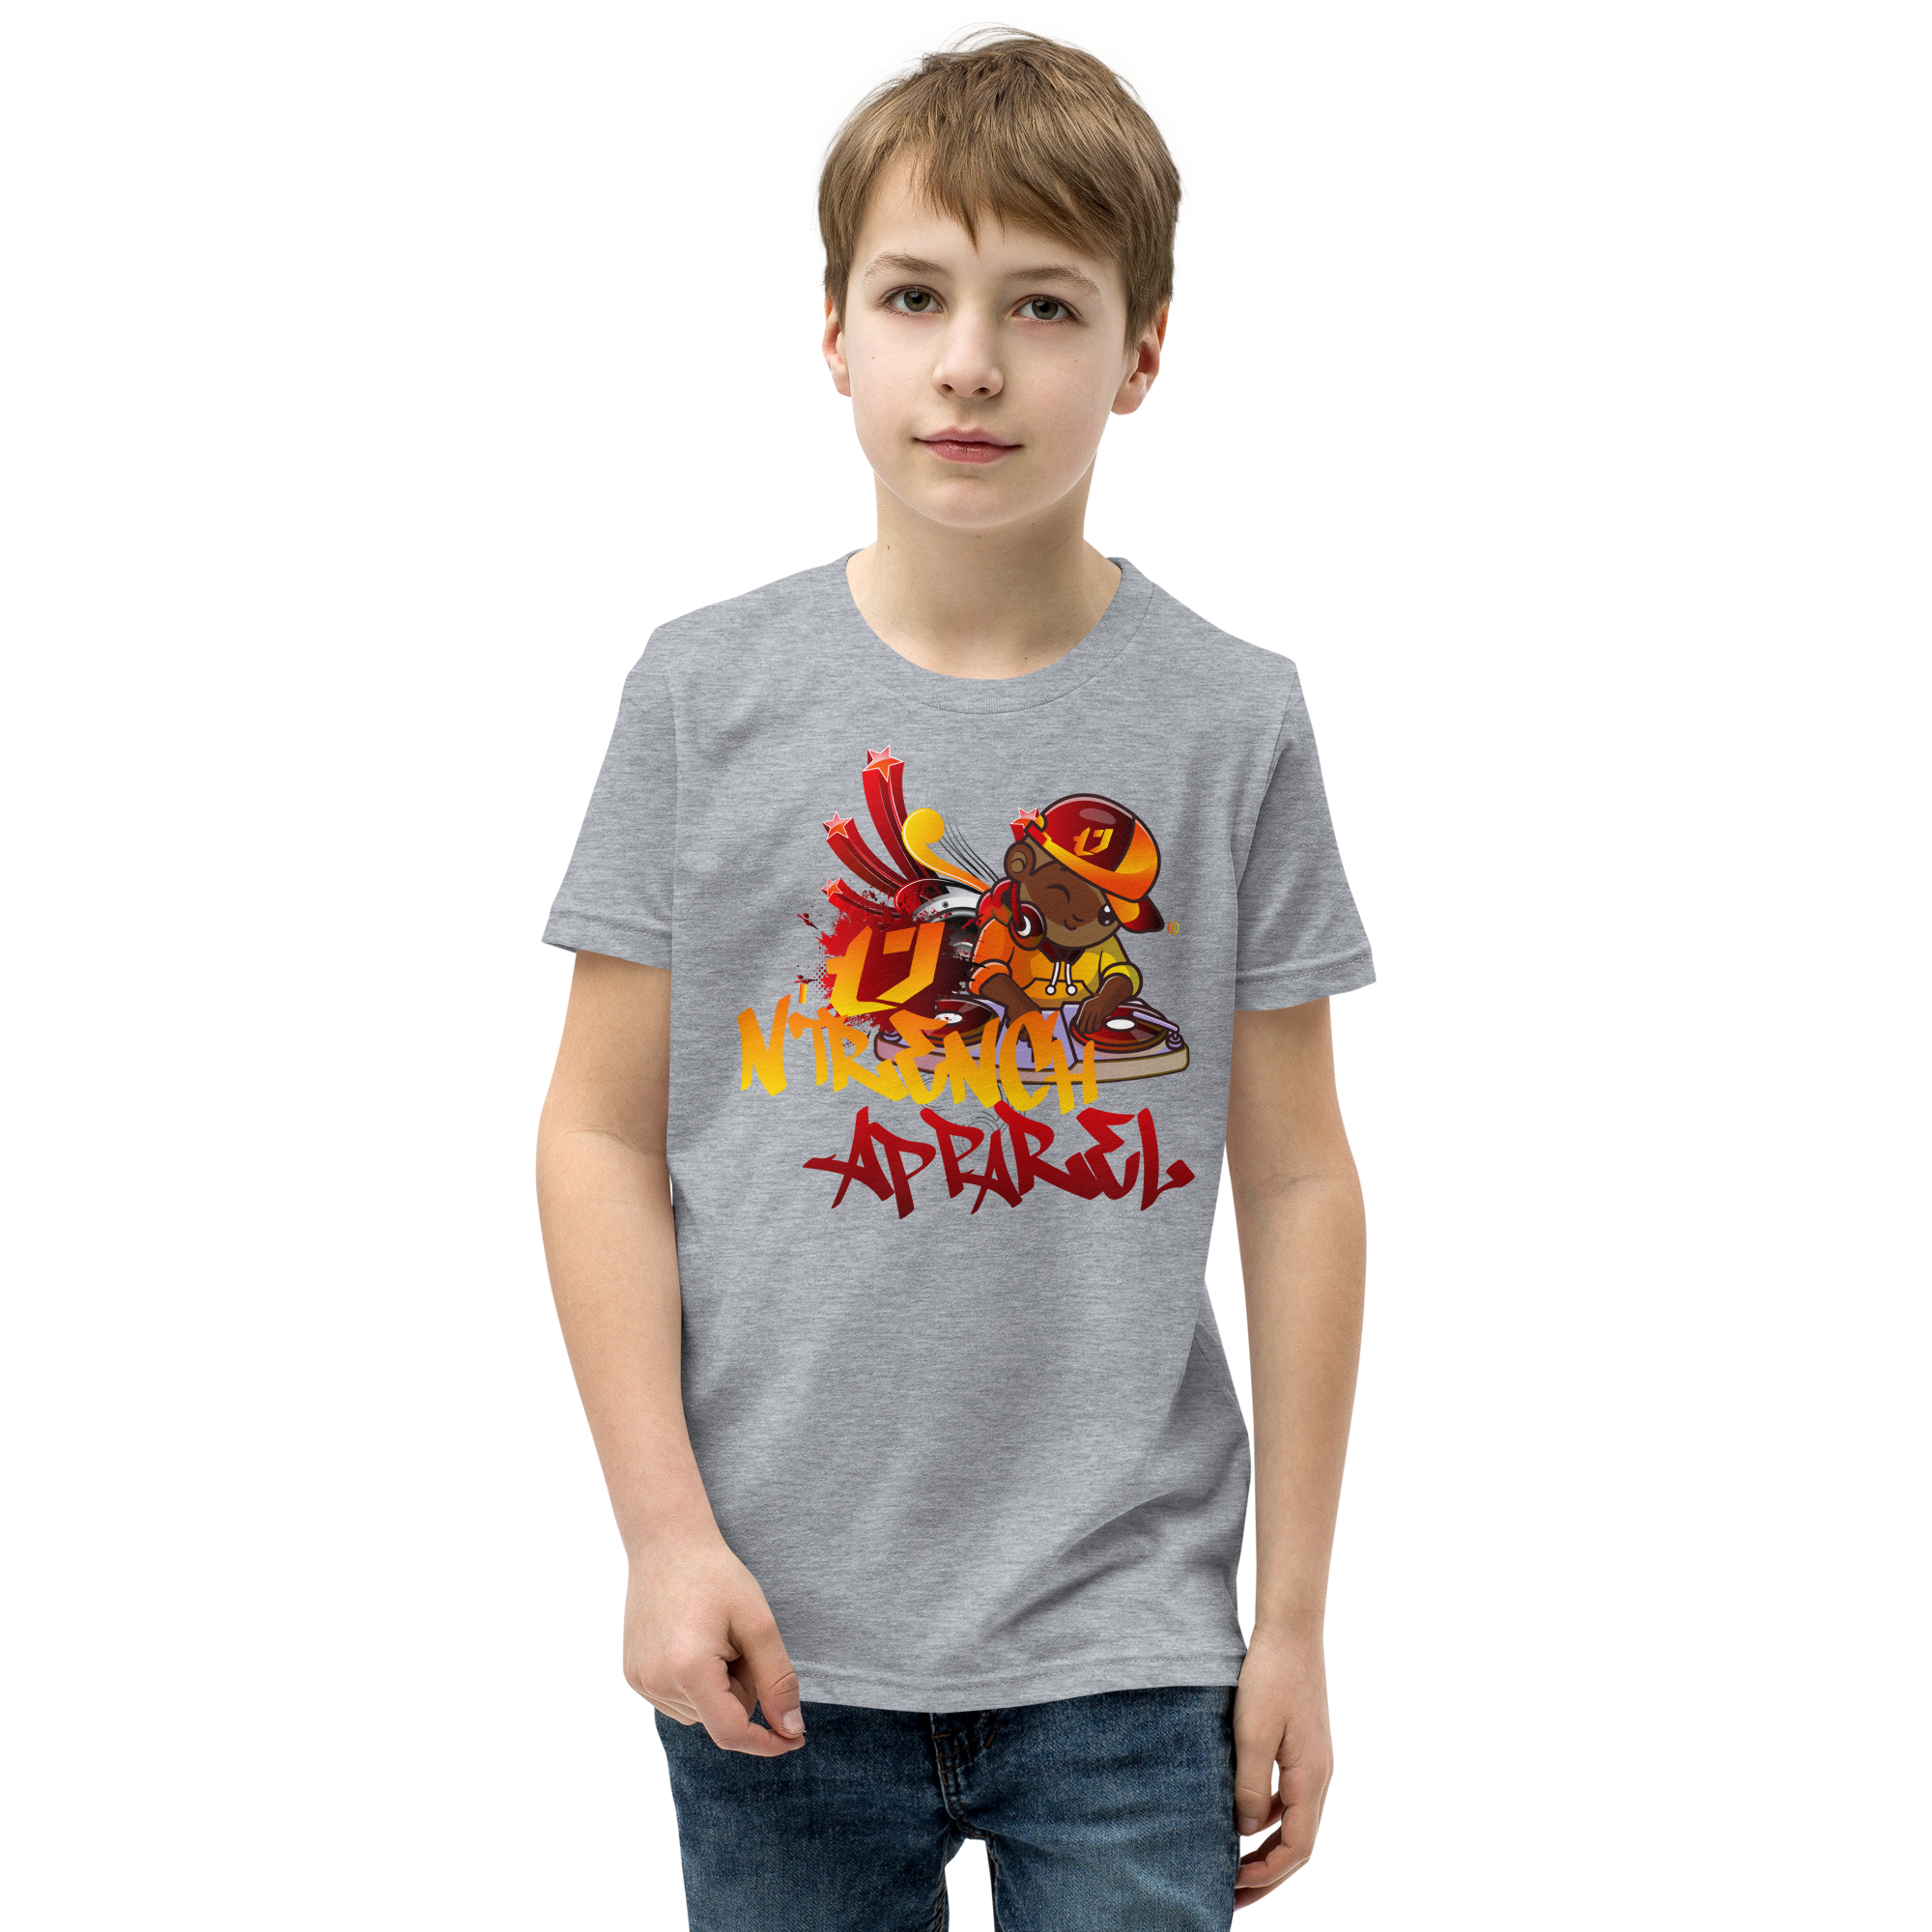 Kids and Youth DJ Design Short Sleeve T-Shirt